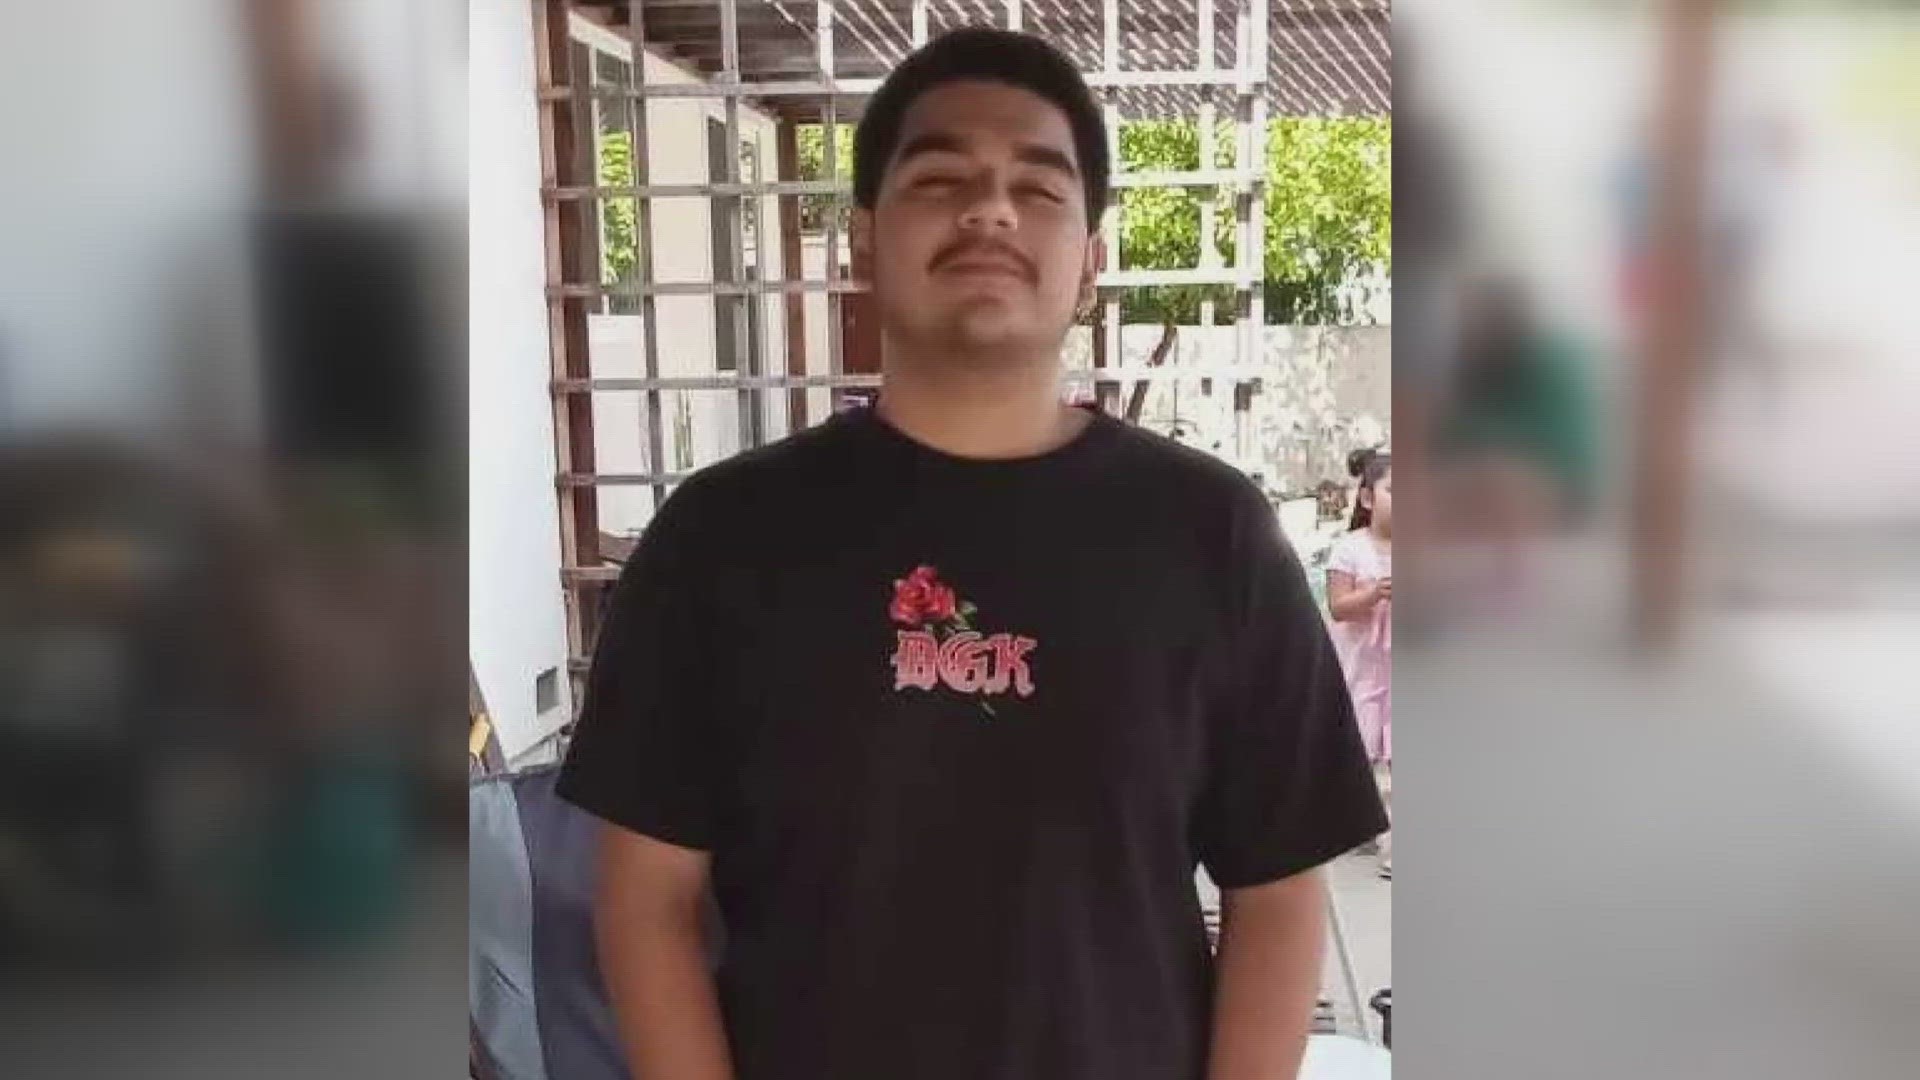 15-year-old Alan Ruiz was killed in Lodi over the weekend.